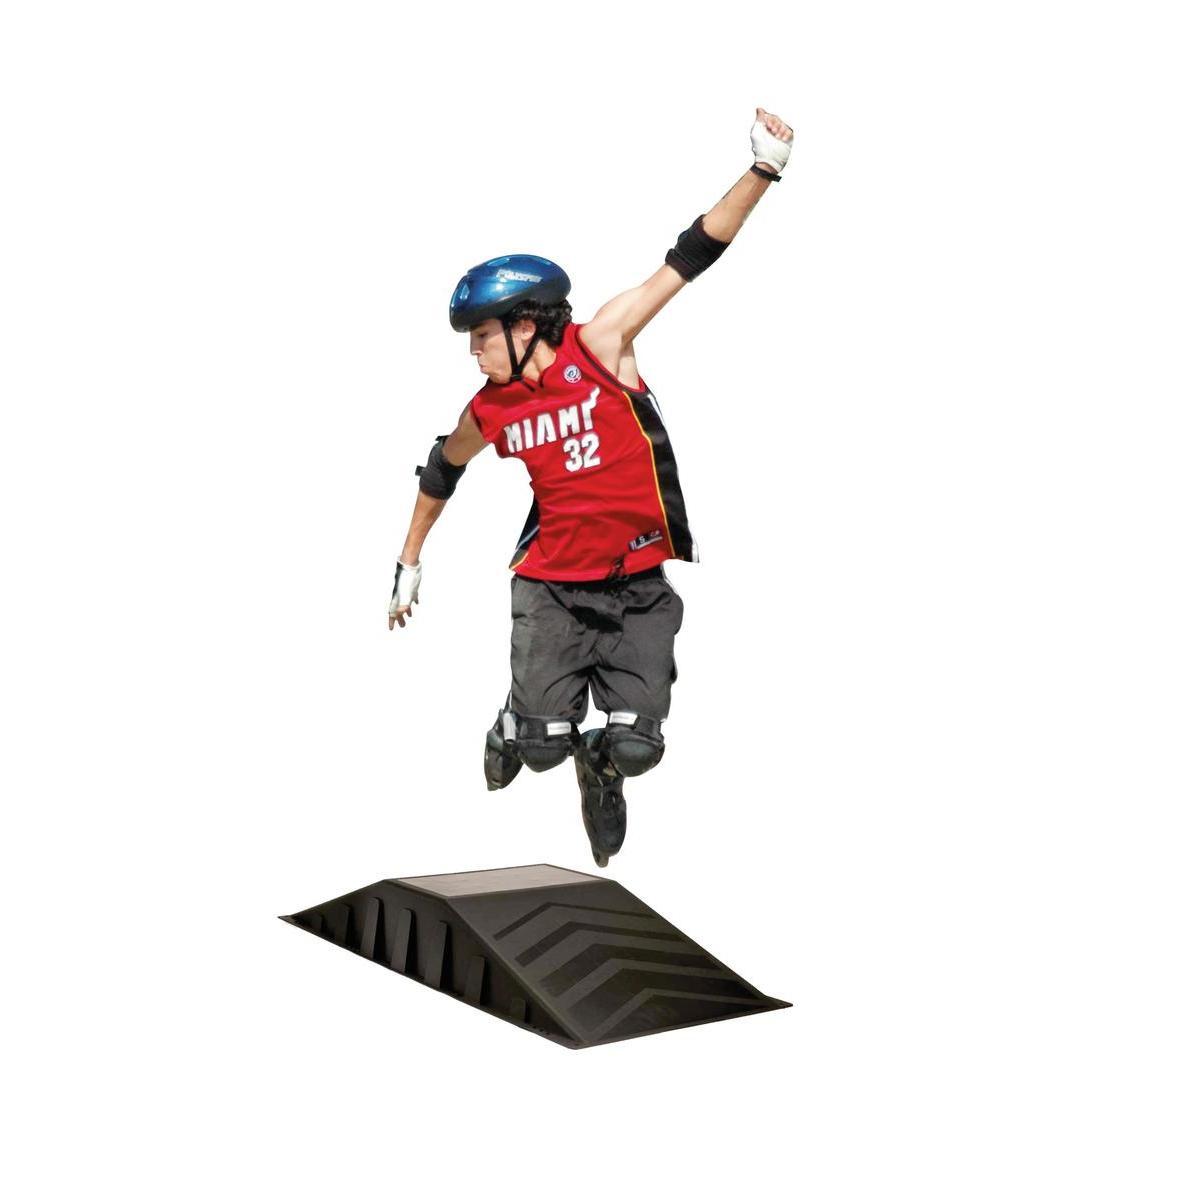 Tremplin de Skateboard - 112 x H 15 x 45 cm - Noir